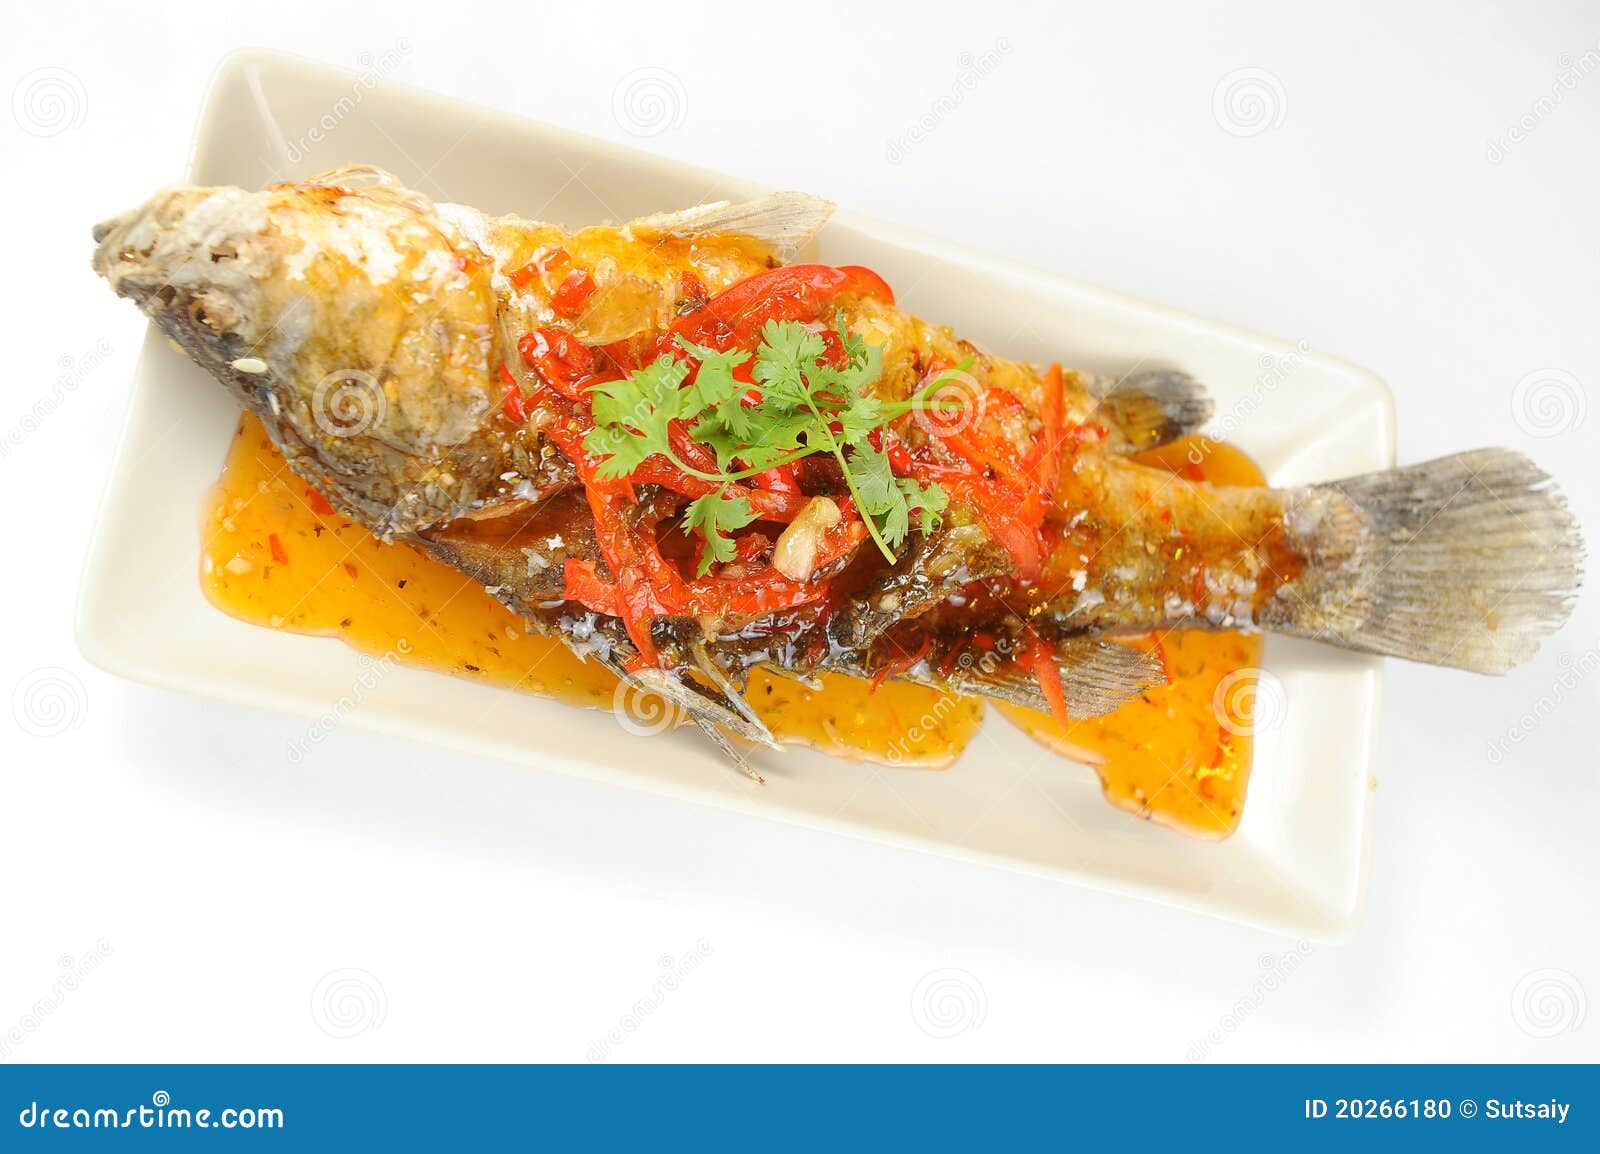 fried grouper fish